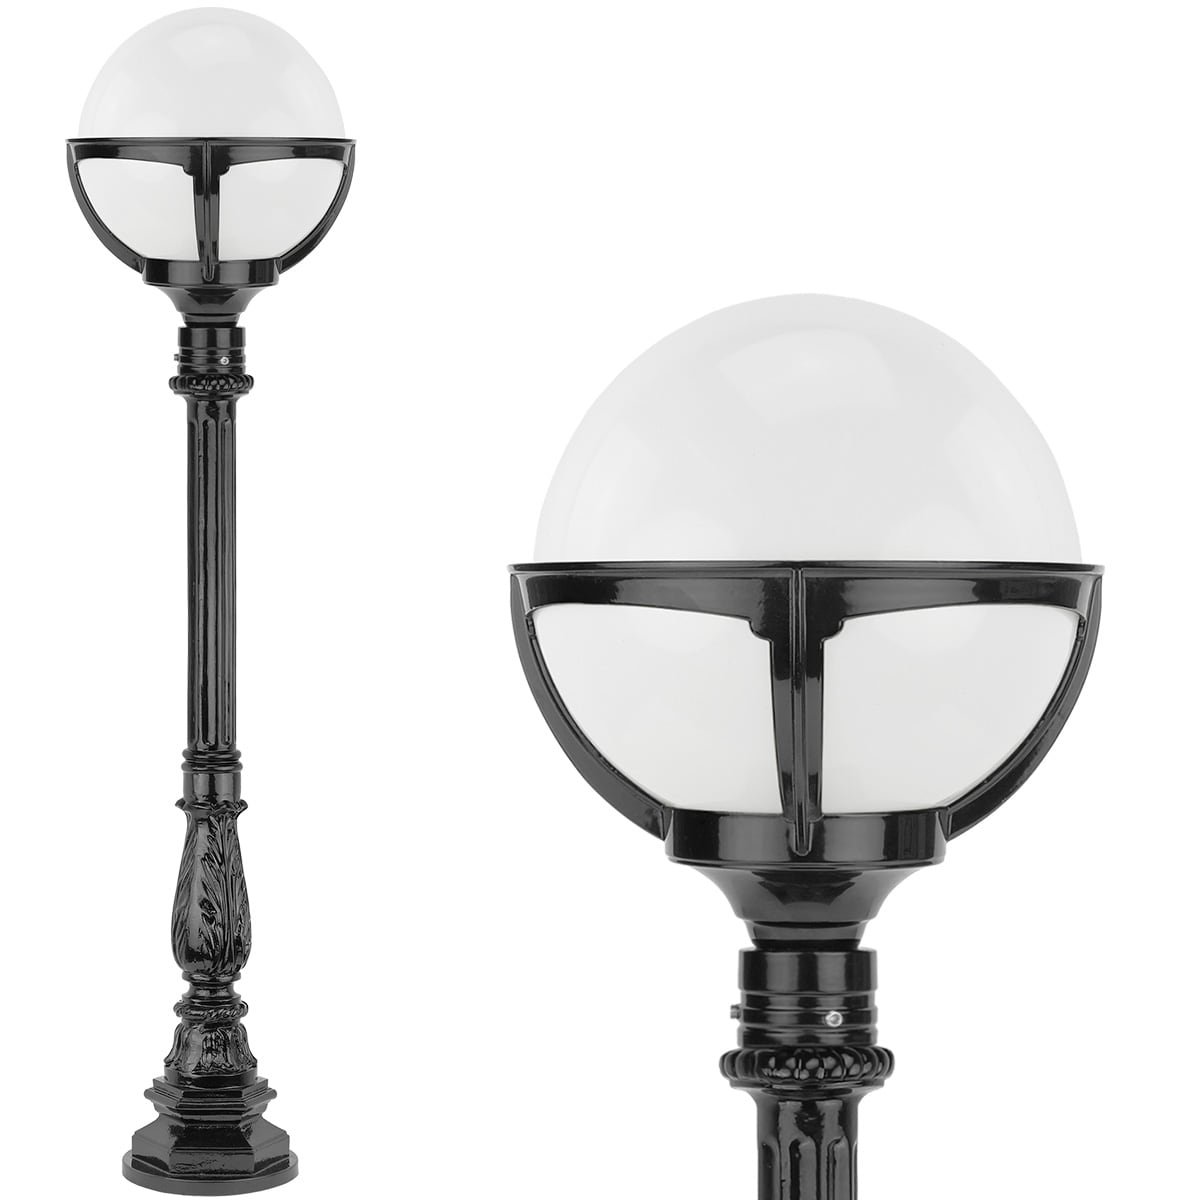 Lampe boule verre blanc Boerdam - 120 cm